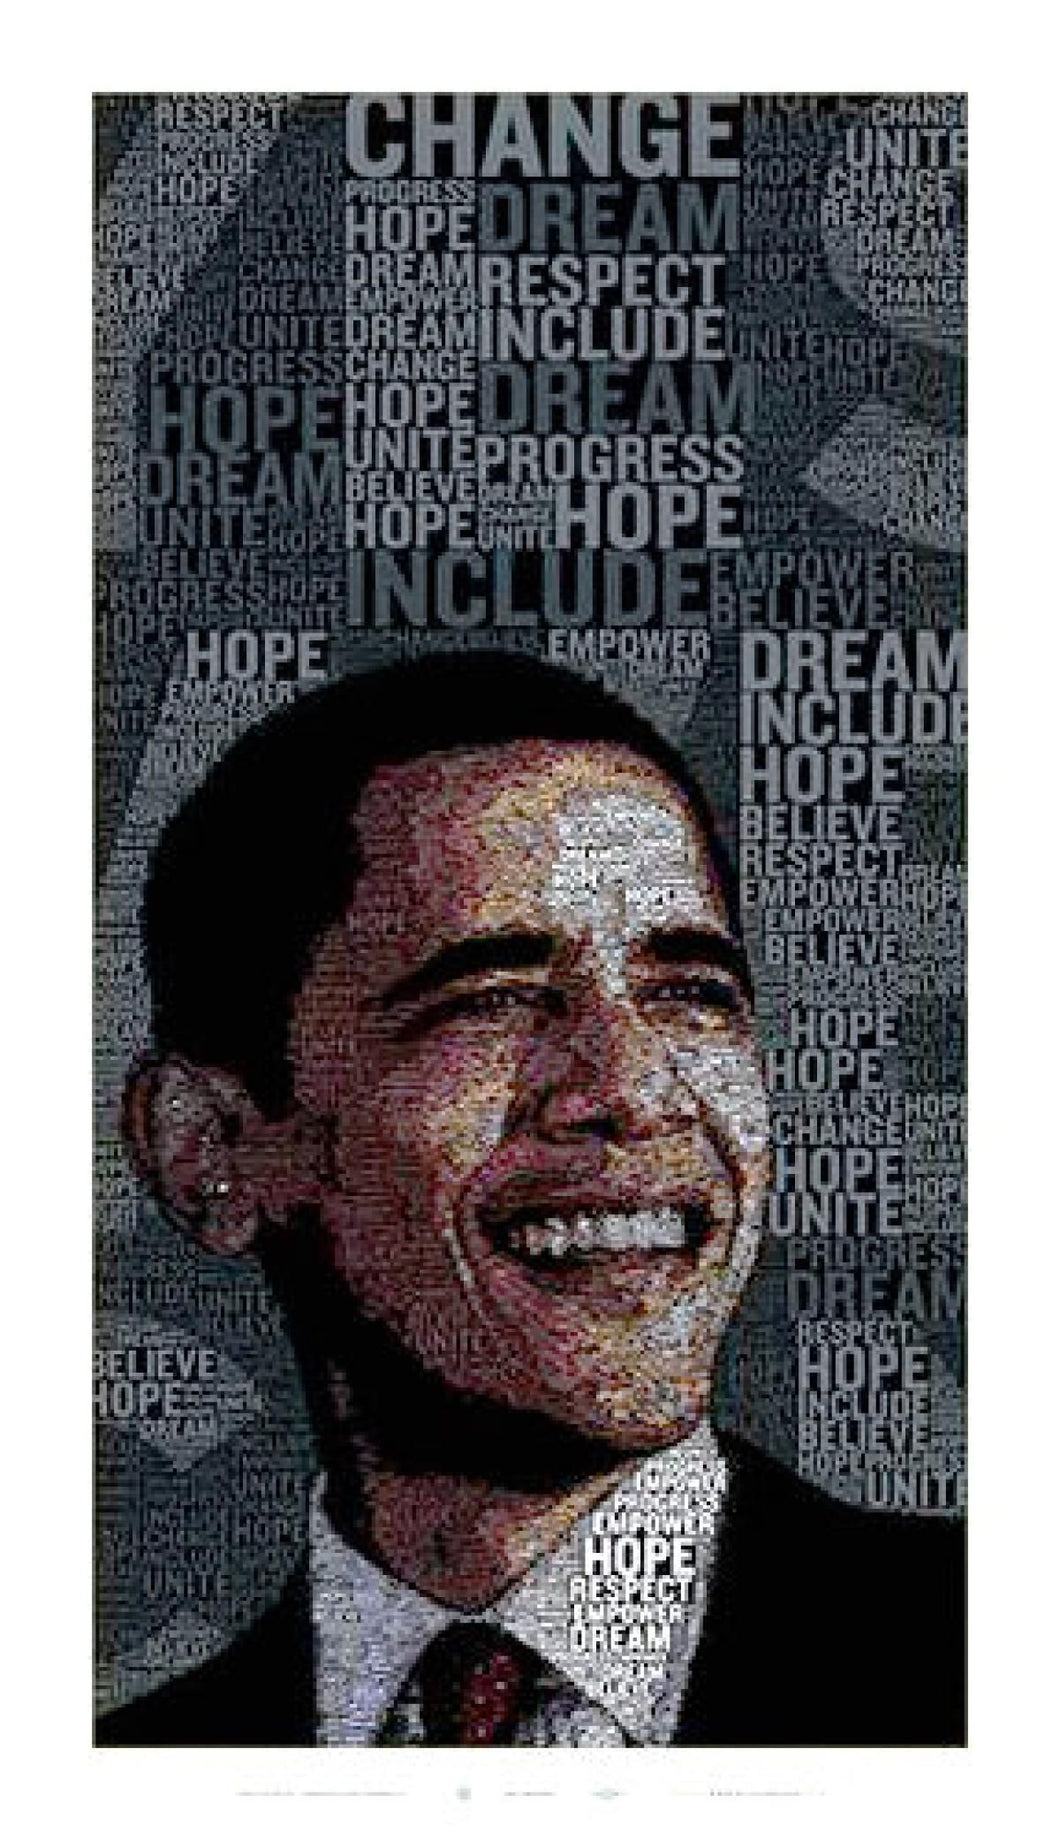 Gui Borchert - Obama Words of Change 2008